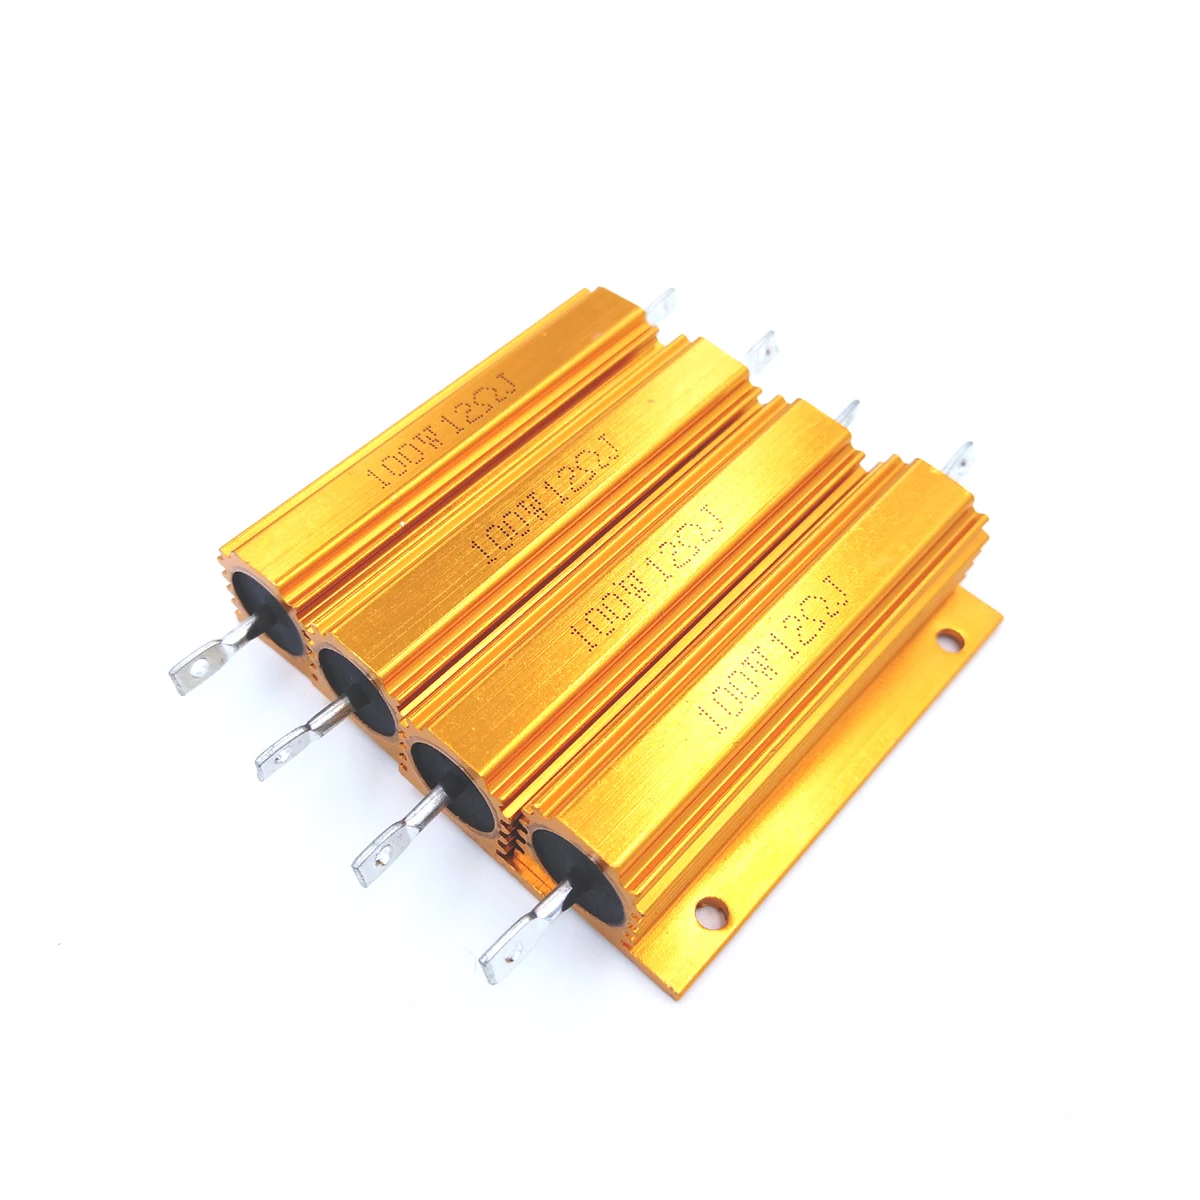 

18R 18ohm 18 47R 47ohm 47 R Ohm 100W Watt Aluminum Wirewound Power Metal Shell Case Resistor Resistance RX24